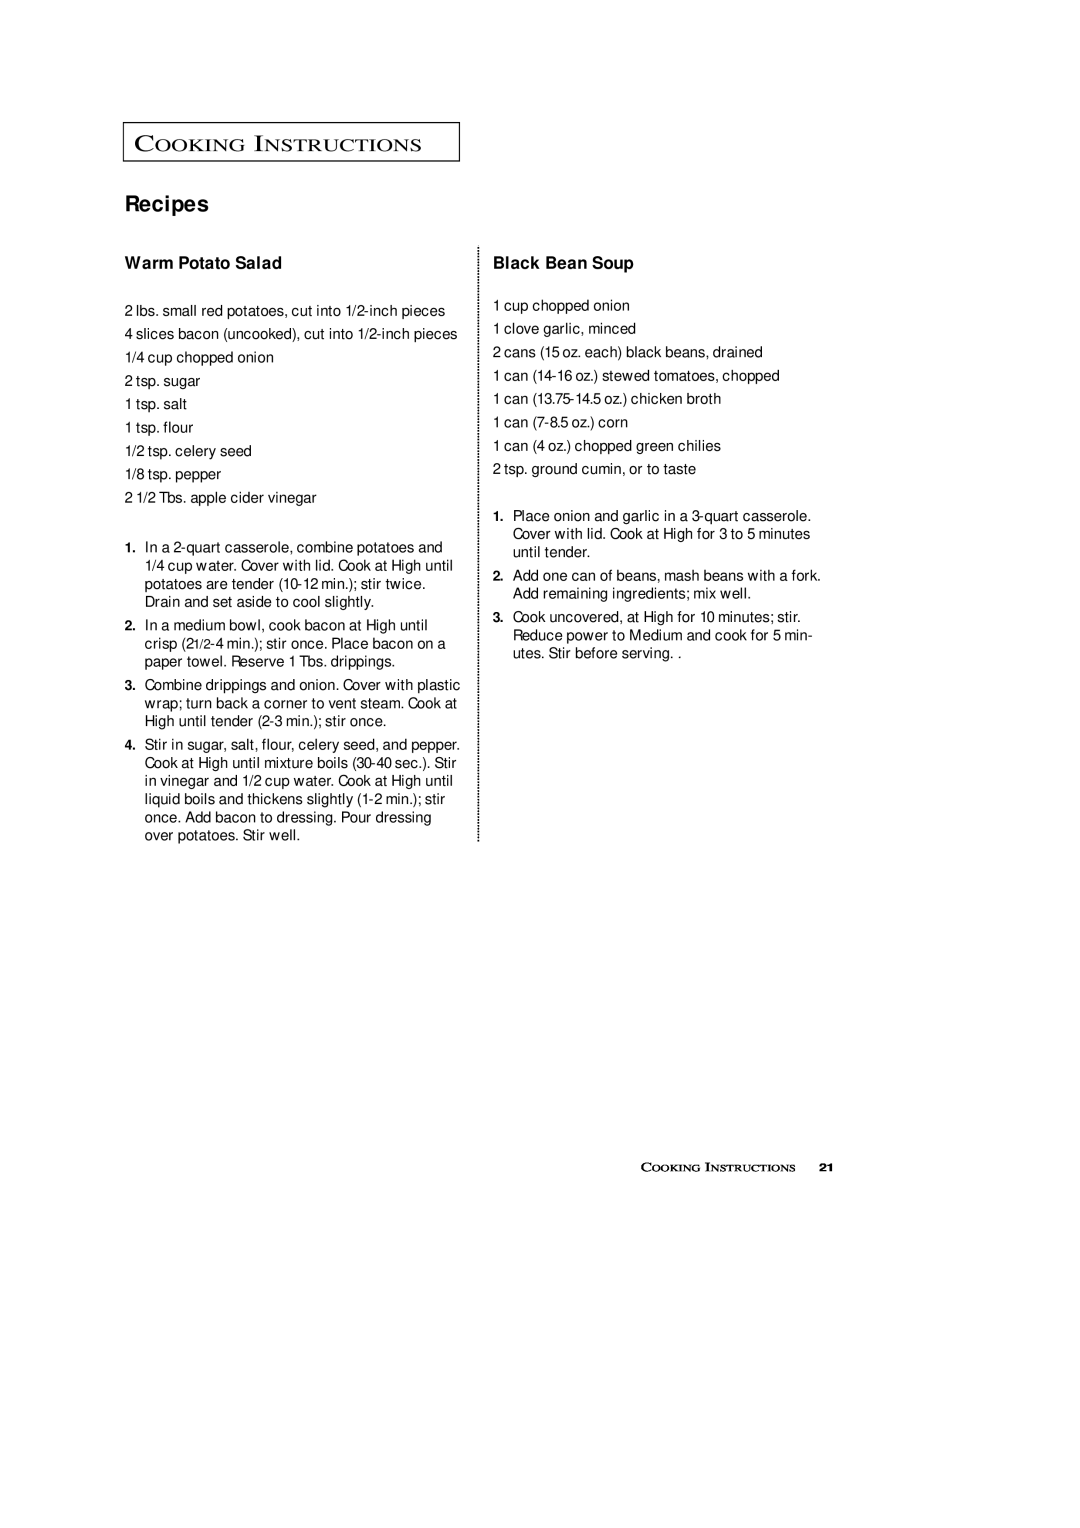 Samsung SRH1230ZG owner manual Warm Potato Salad, Black Bean Soup, Recipes, Cooking Instructions 